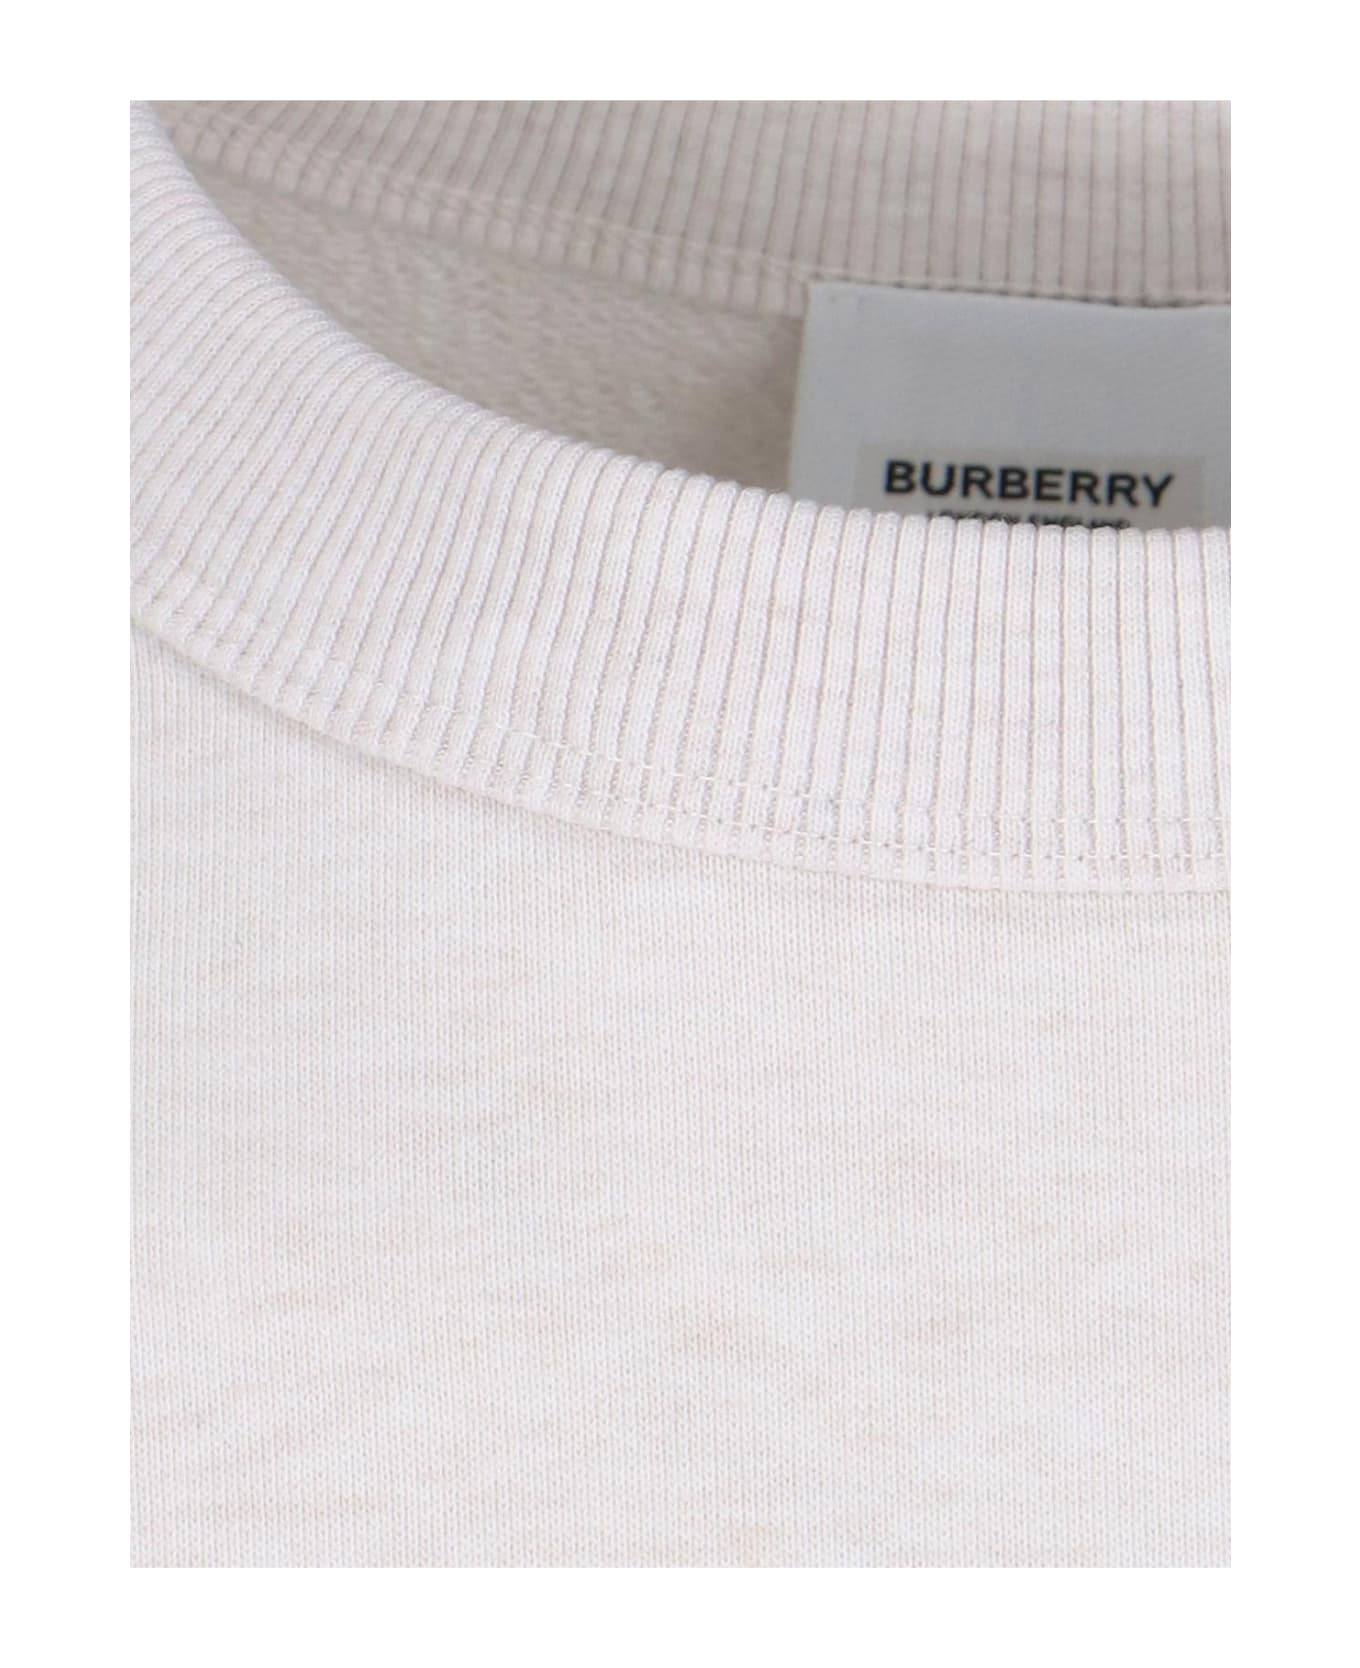 Burberry Embossed Logo Sweatshirt - Beige 靴下